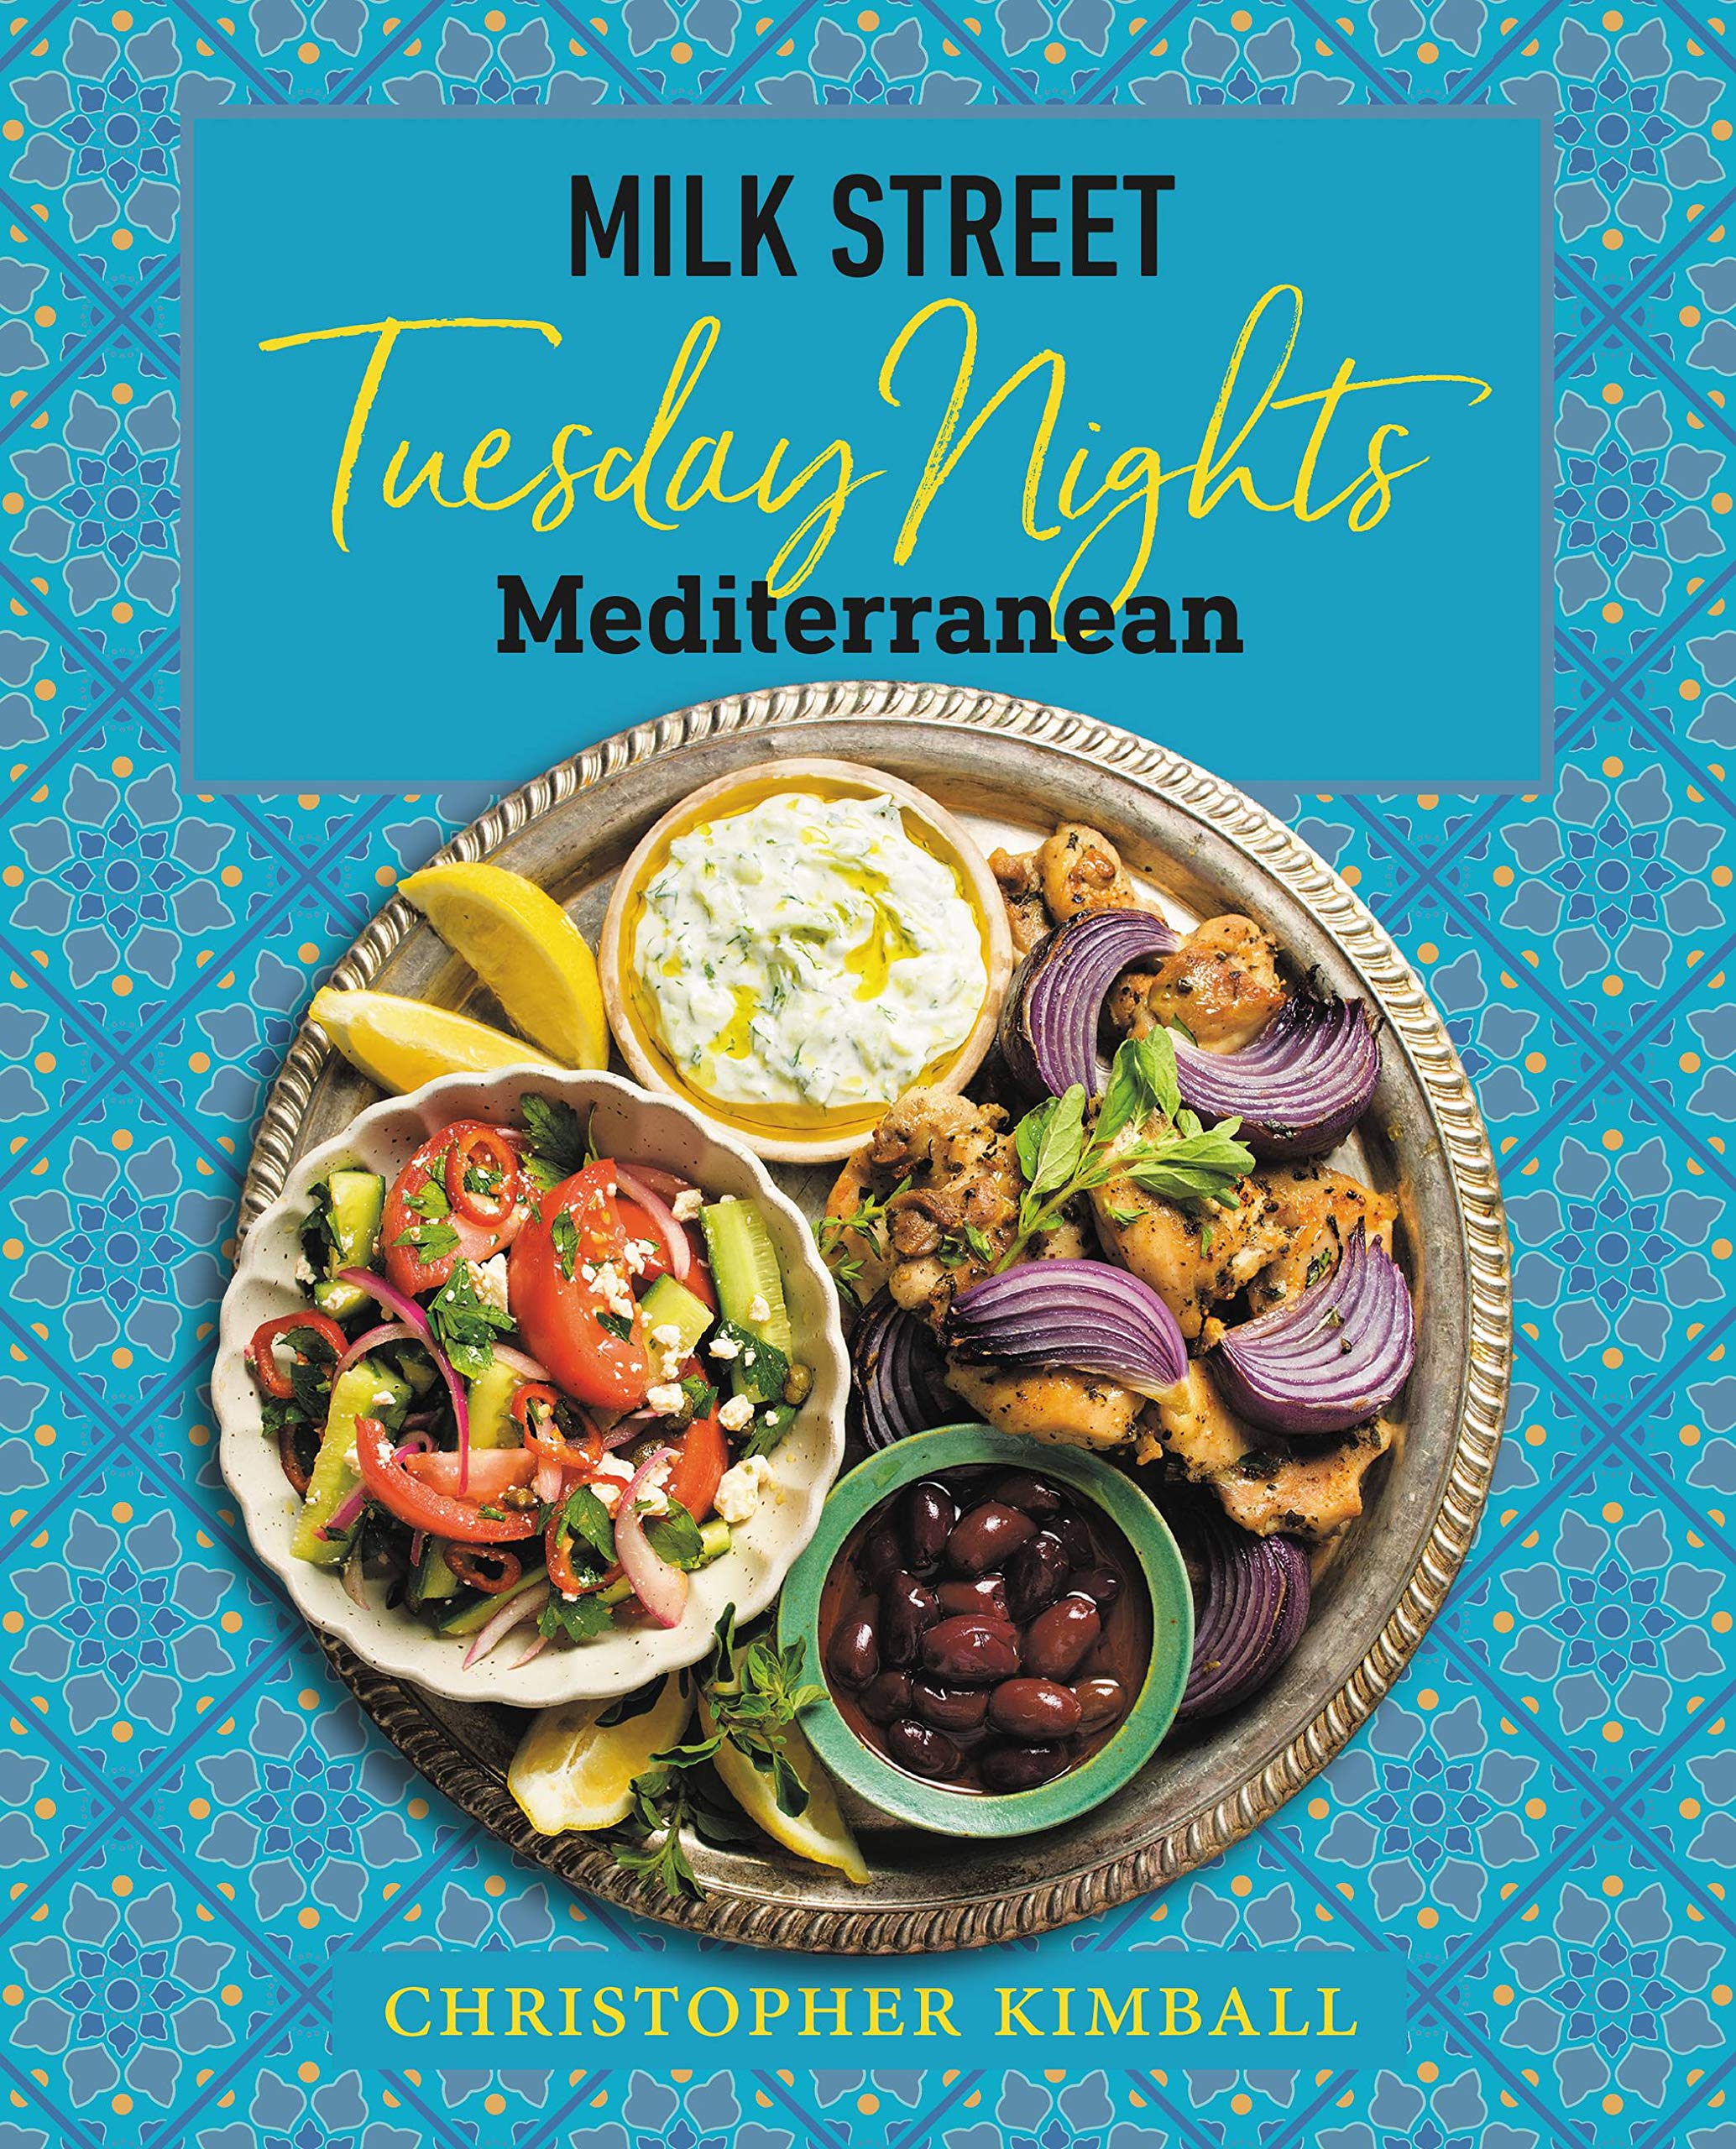 Milk Street: Tuesday Nights Mediterranean (Christopher Kimball)